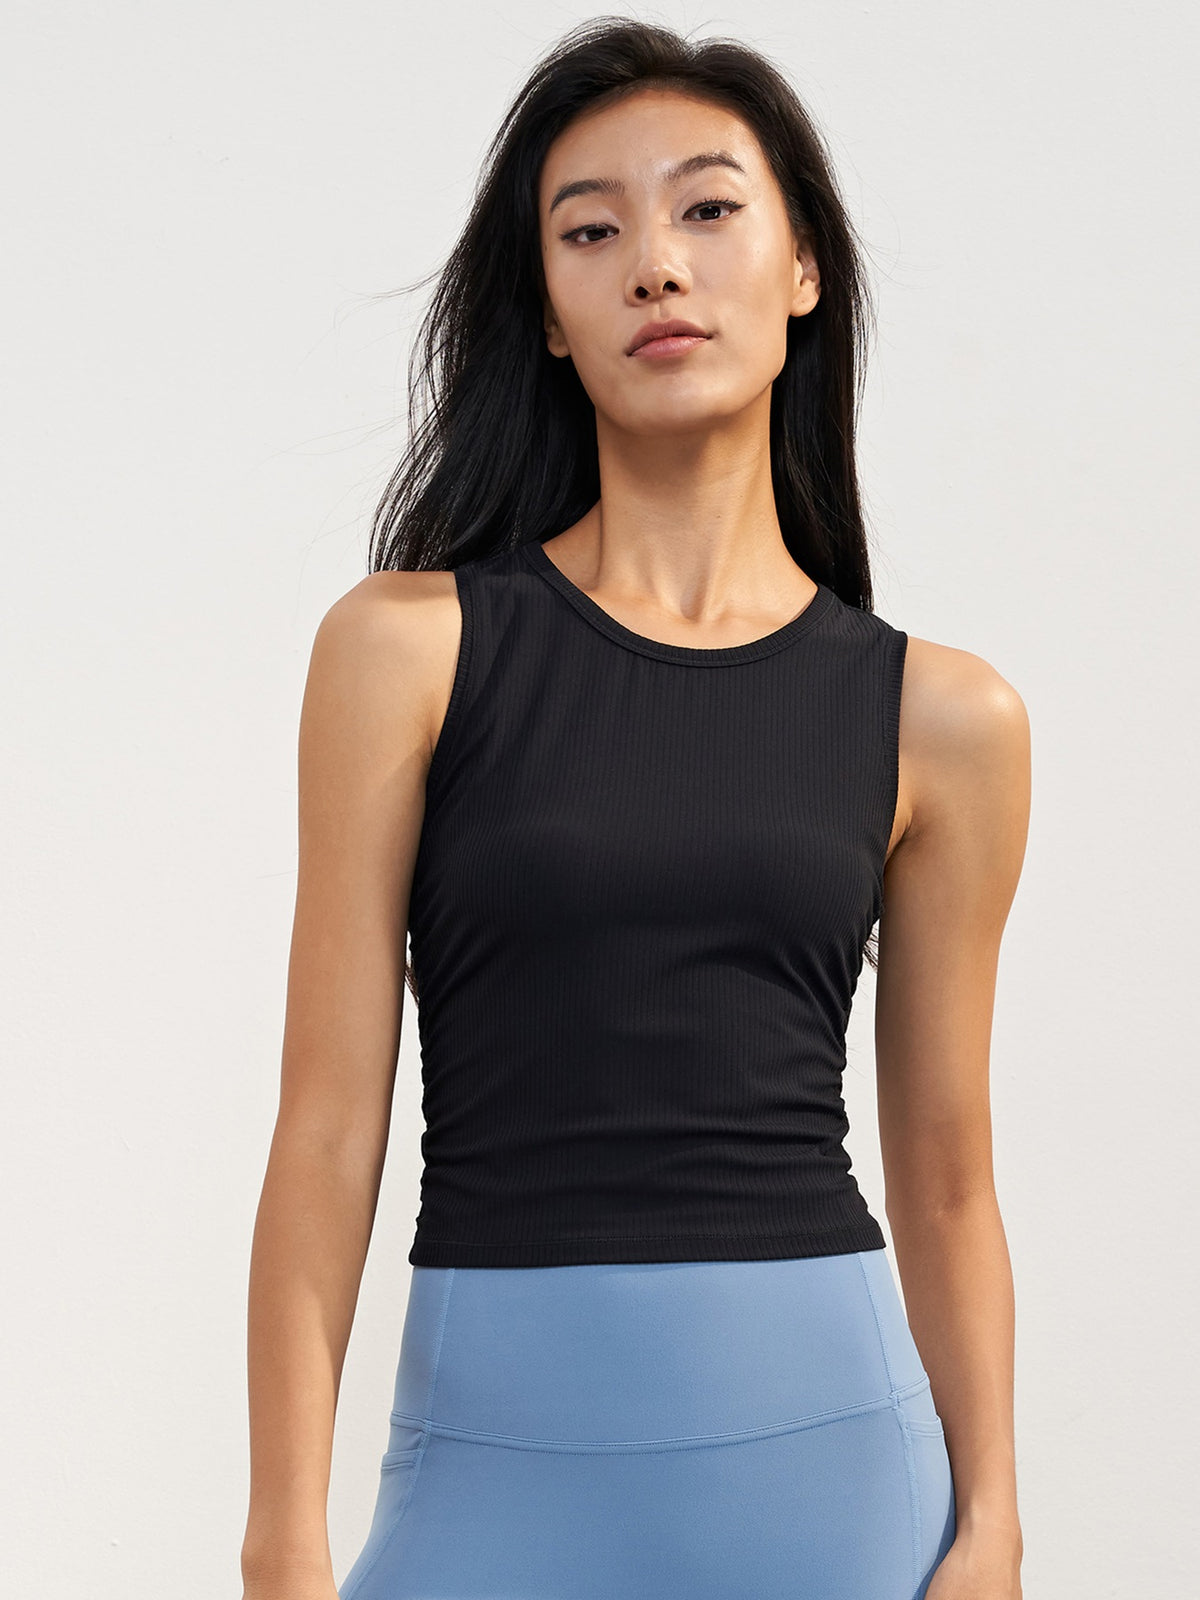 Women's ribbed slim yoga sports T-shirt with slim waist and round neck sports top sleeveless bottom Fitness vest